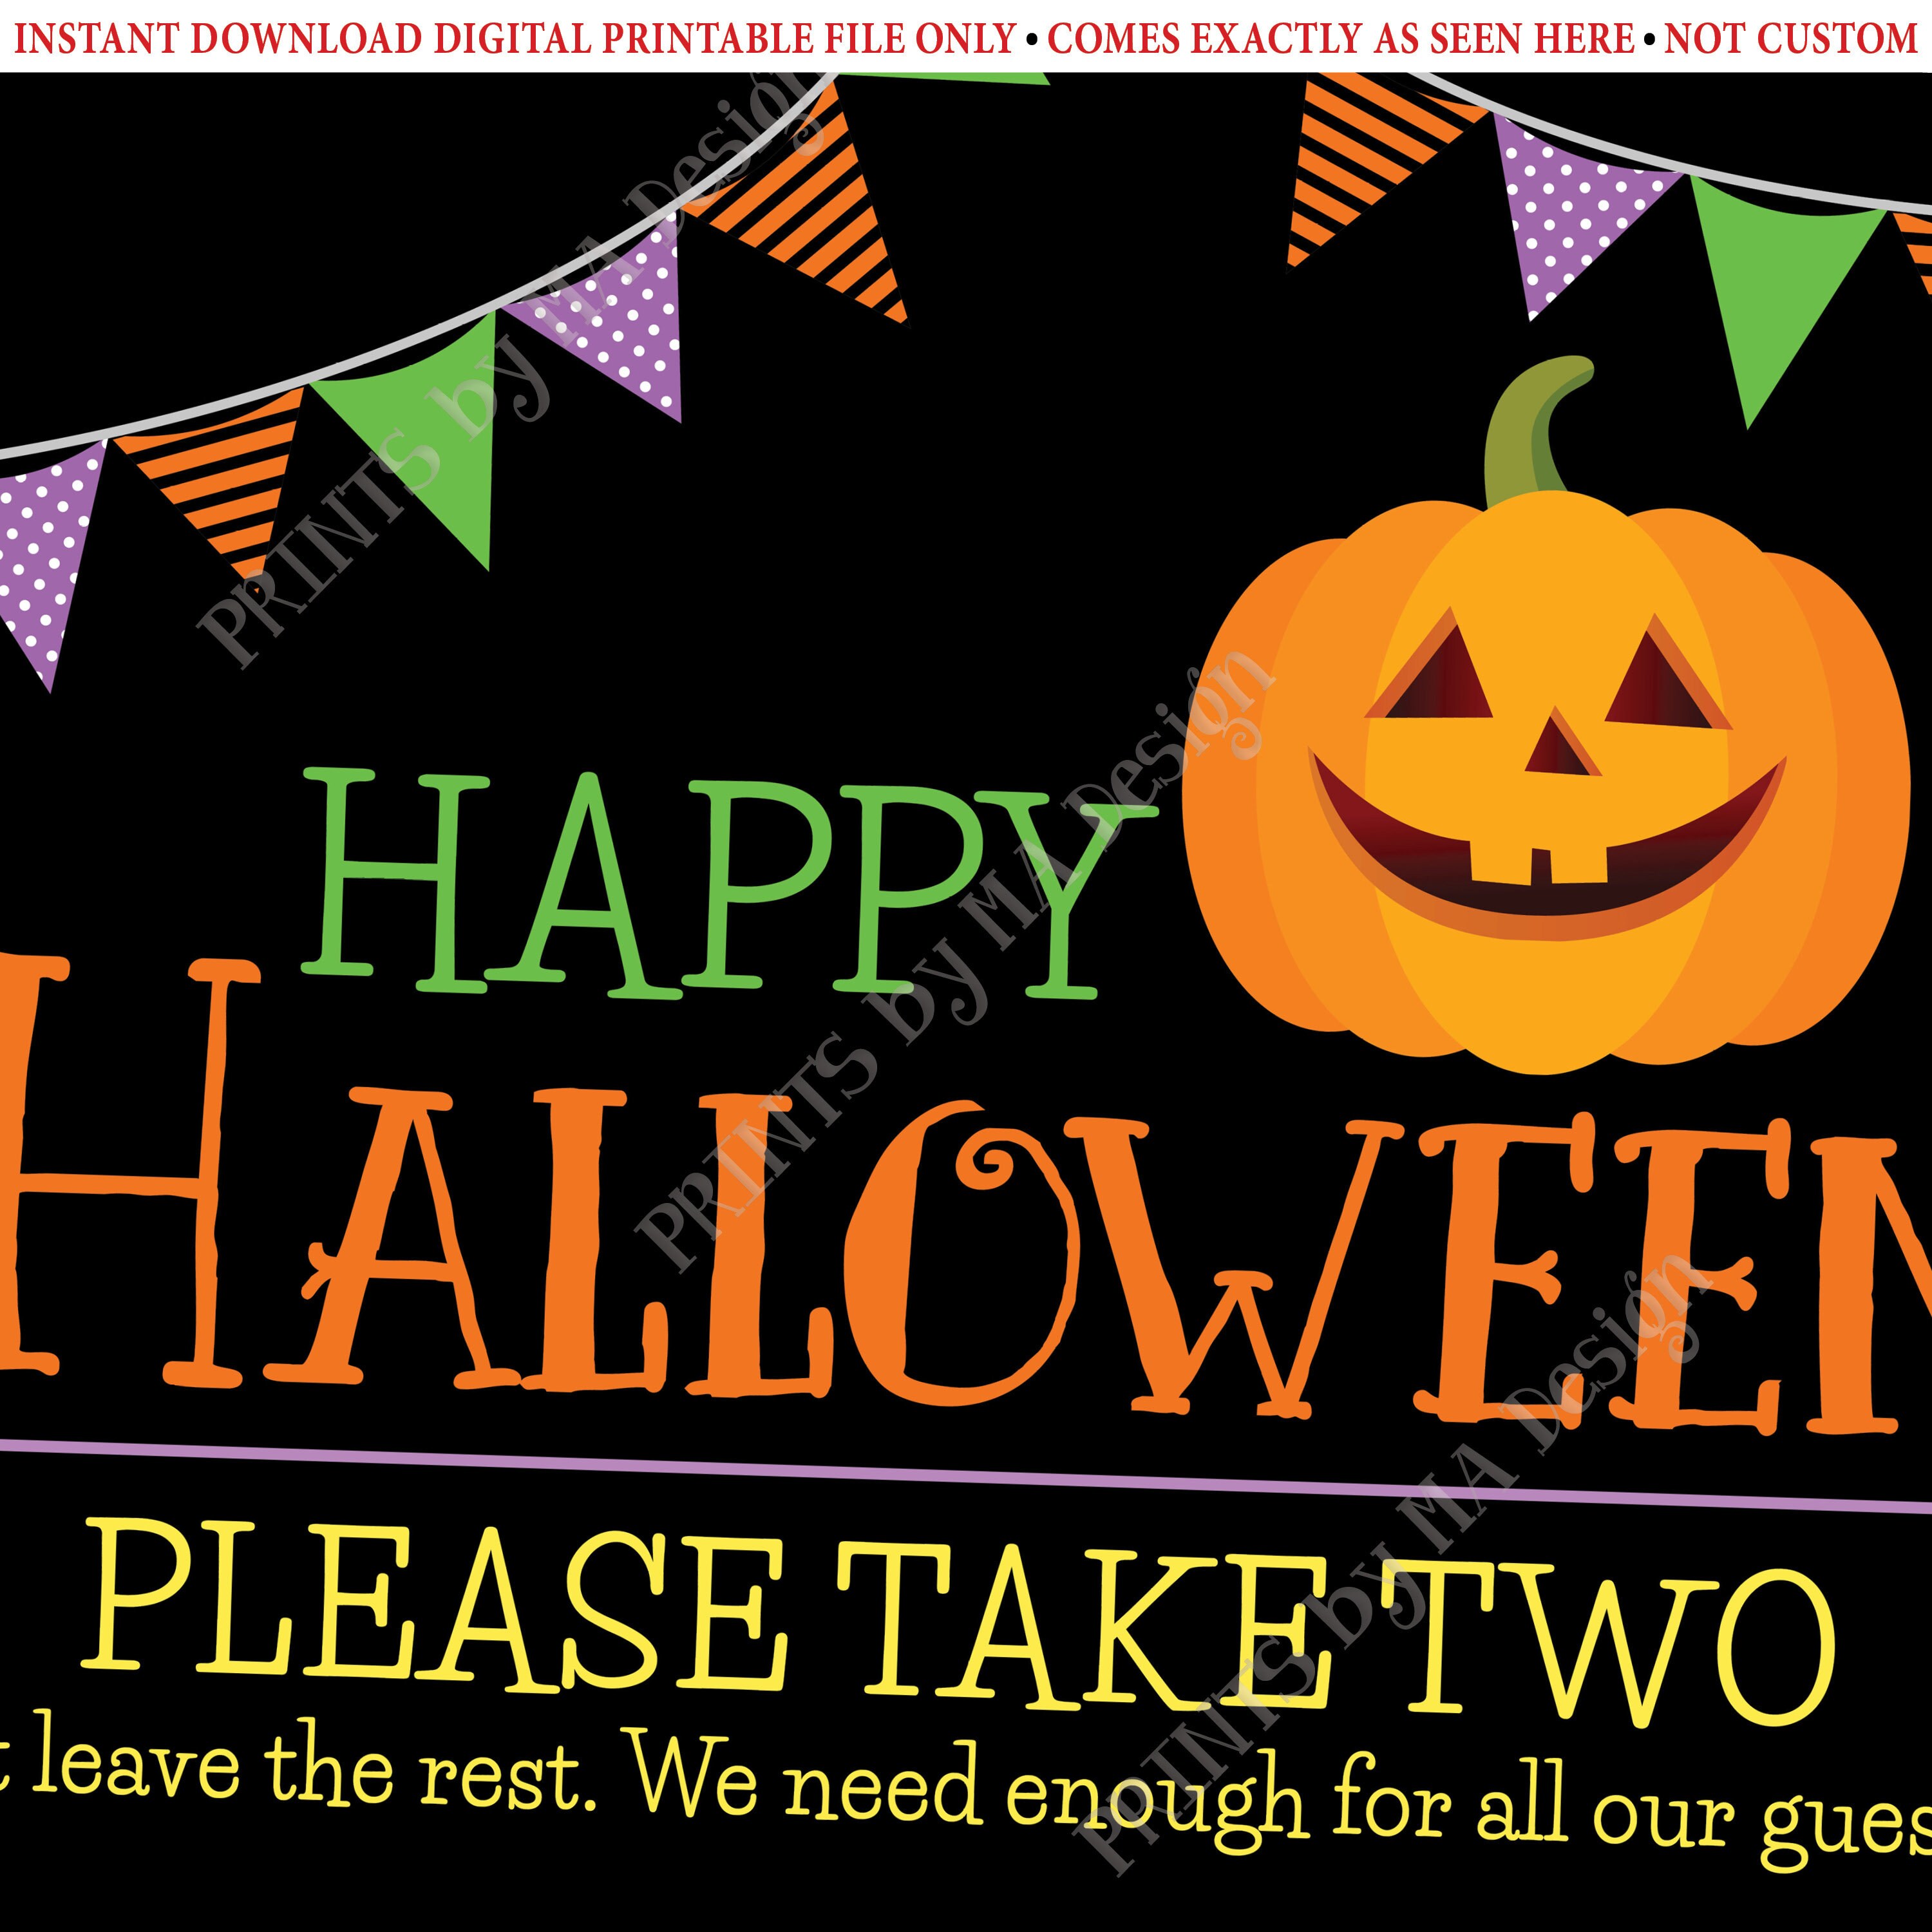 Happy Halloween Candy Sign Please Take Two Treats Jack O Lantern Pumpkin PRINTABLE 8x10 16x20 